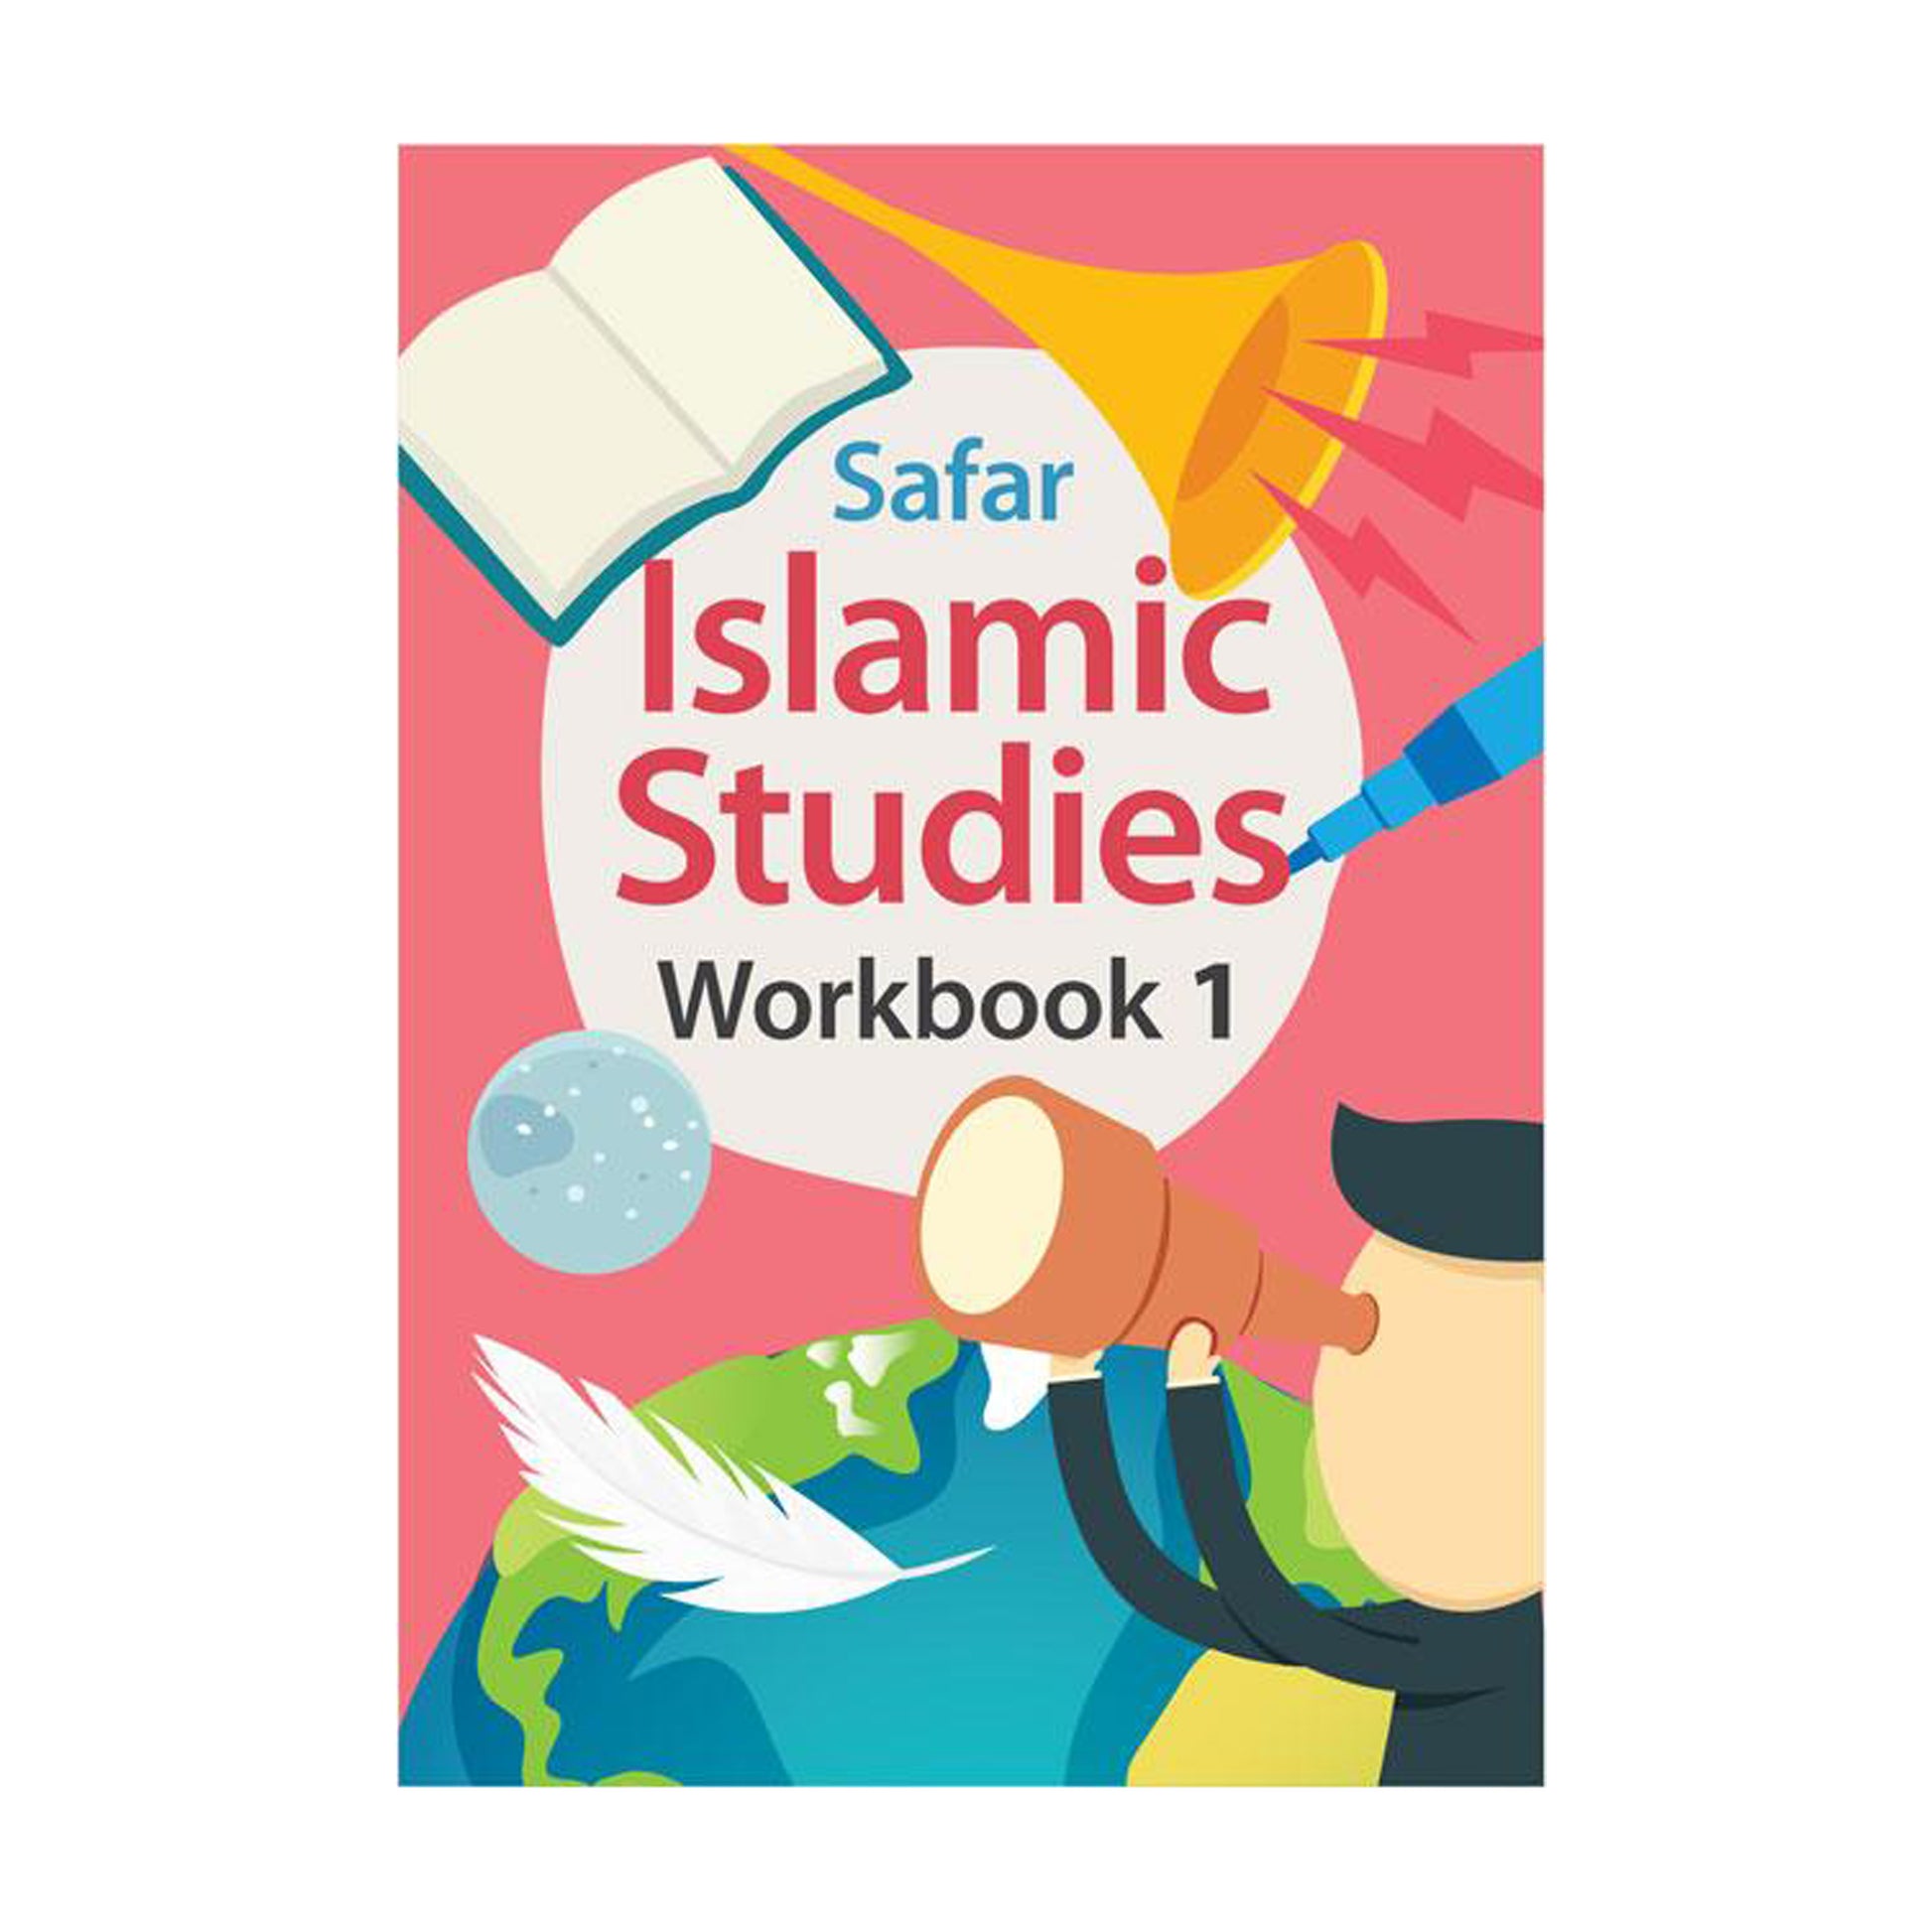 Islamic Studies Workbook 1